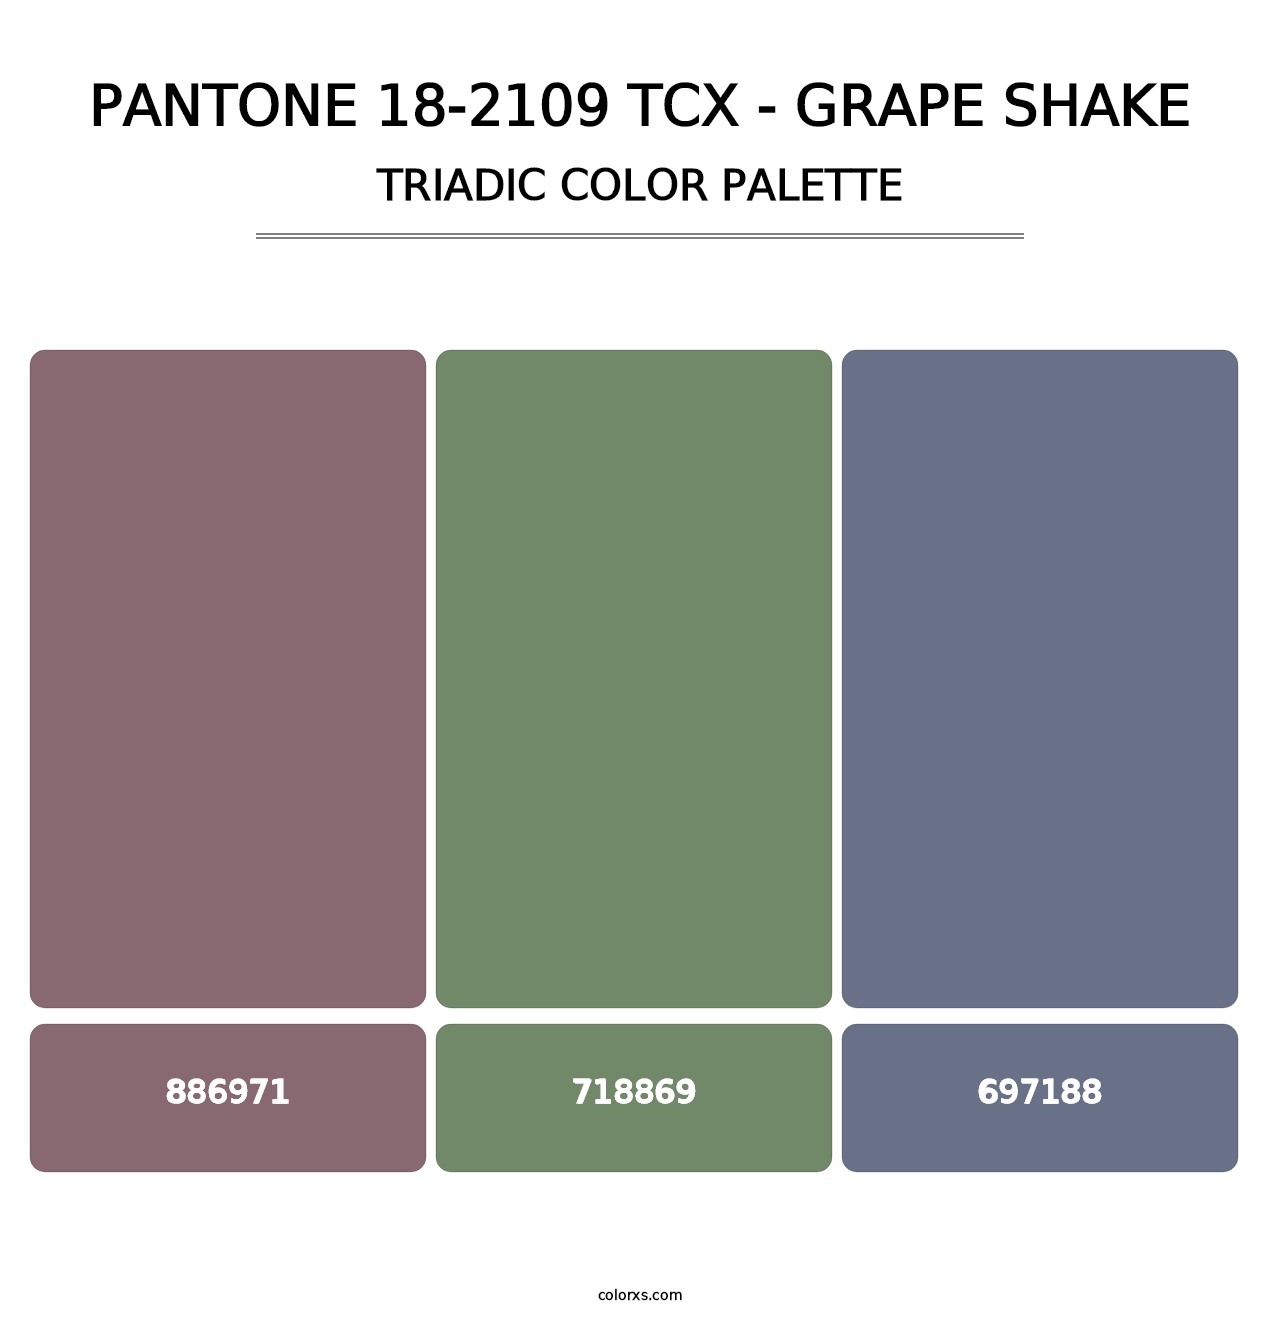 PANTONE 18-2109 TCX - Grape Shake - Triadic Color Palette